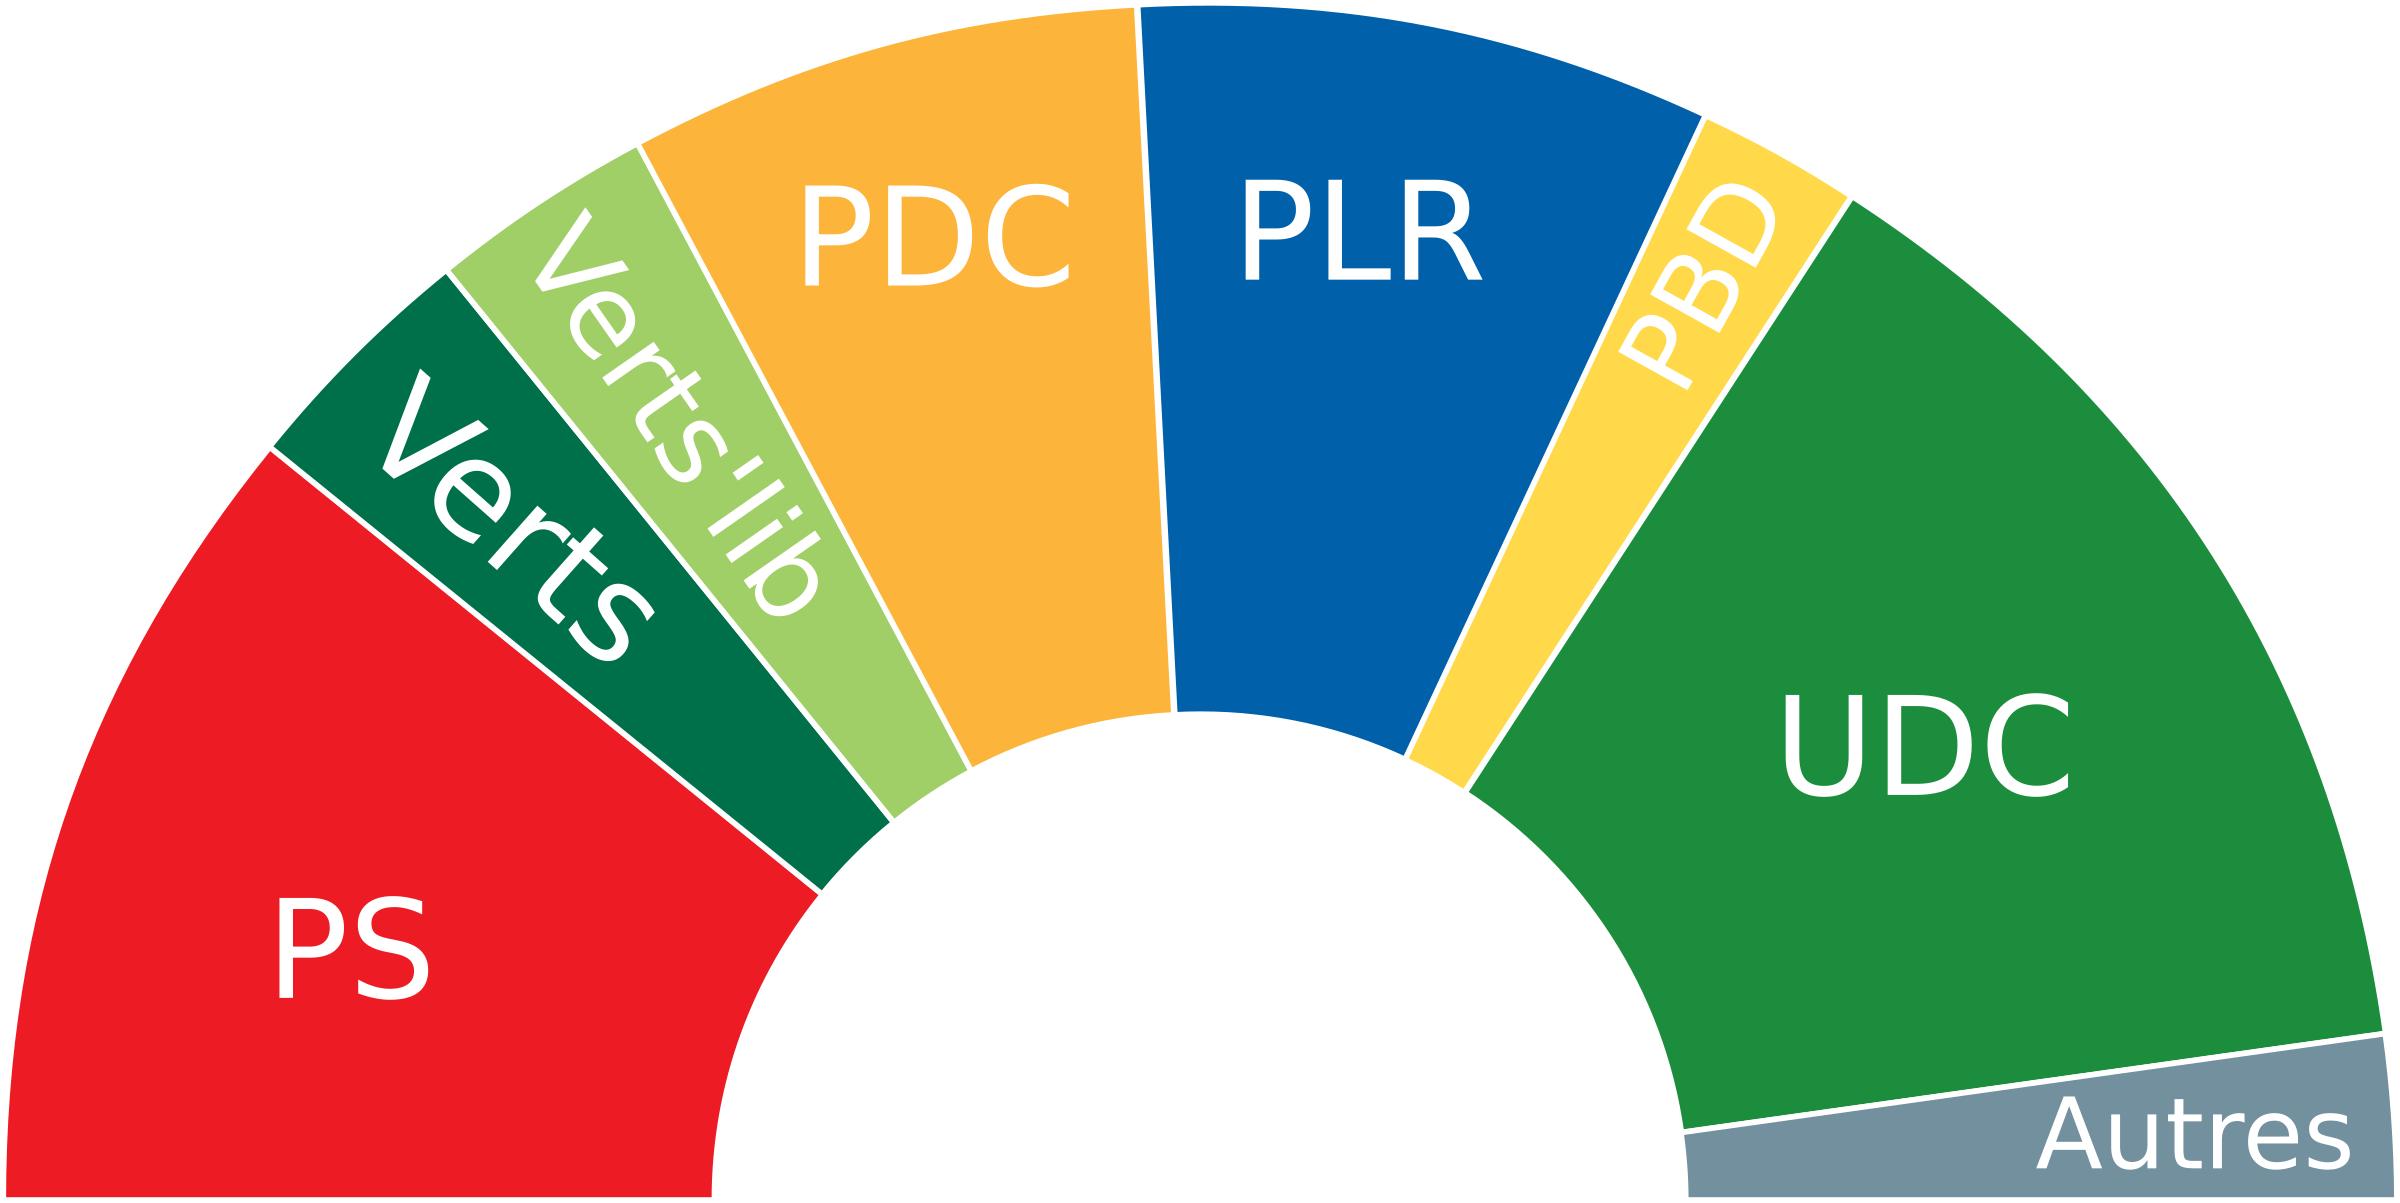 Composition du parlement Suisse - Composition of the Swiss Parliament 2011-2015 png icons